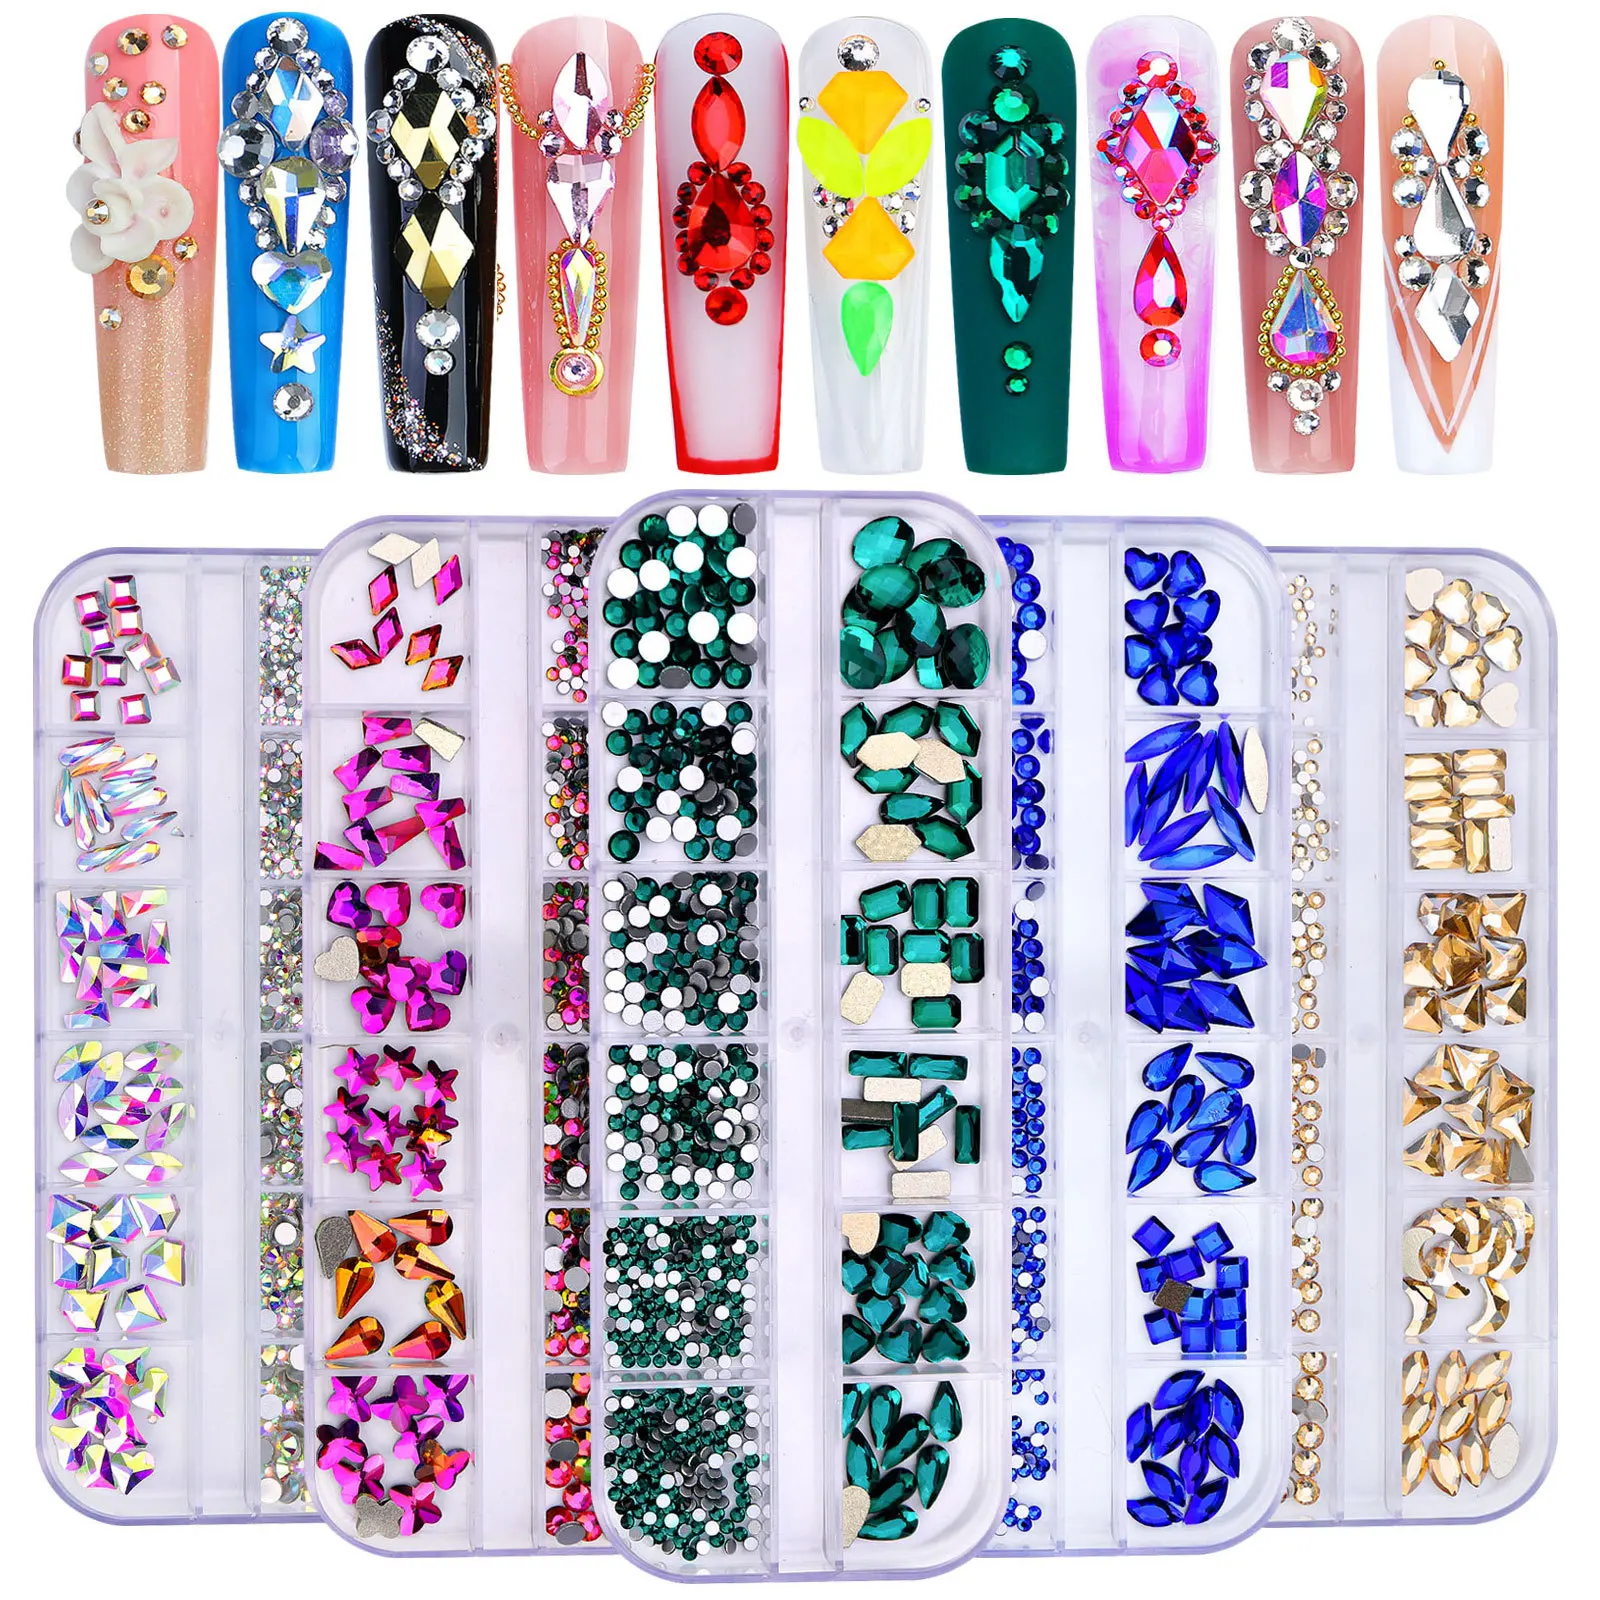 

12 Girds Colorful Nail Rhinestones Mixed Size Diamonds AB Flatback Shiny Crystal 3D Glitter Gems Nail Art Decorations Strass